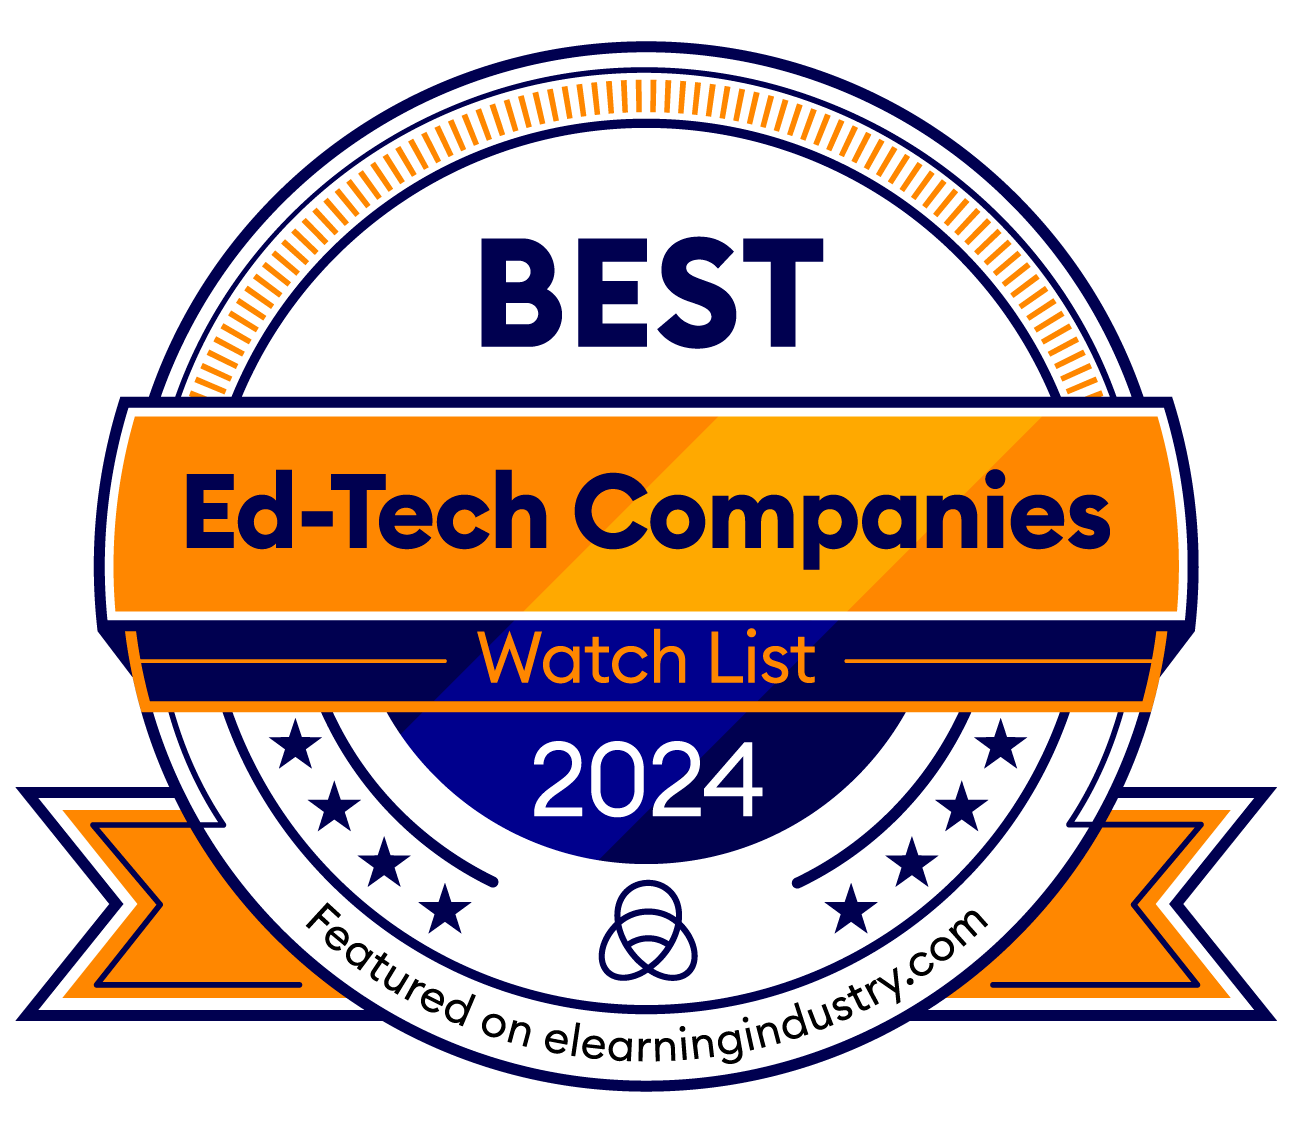 The Best EdTech Companies Of 2024 (Watch List) eLearning Industry